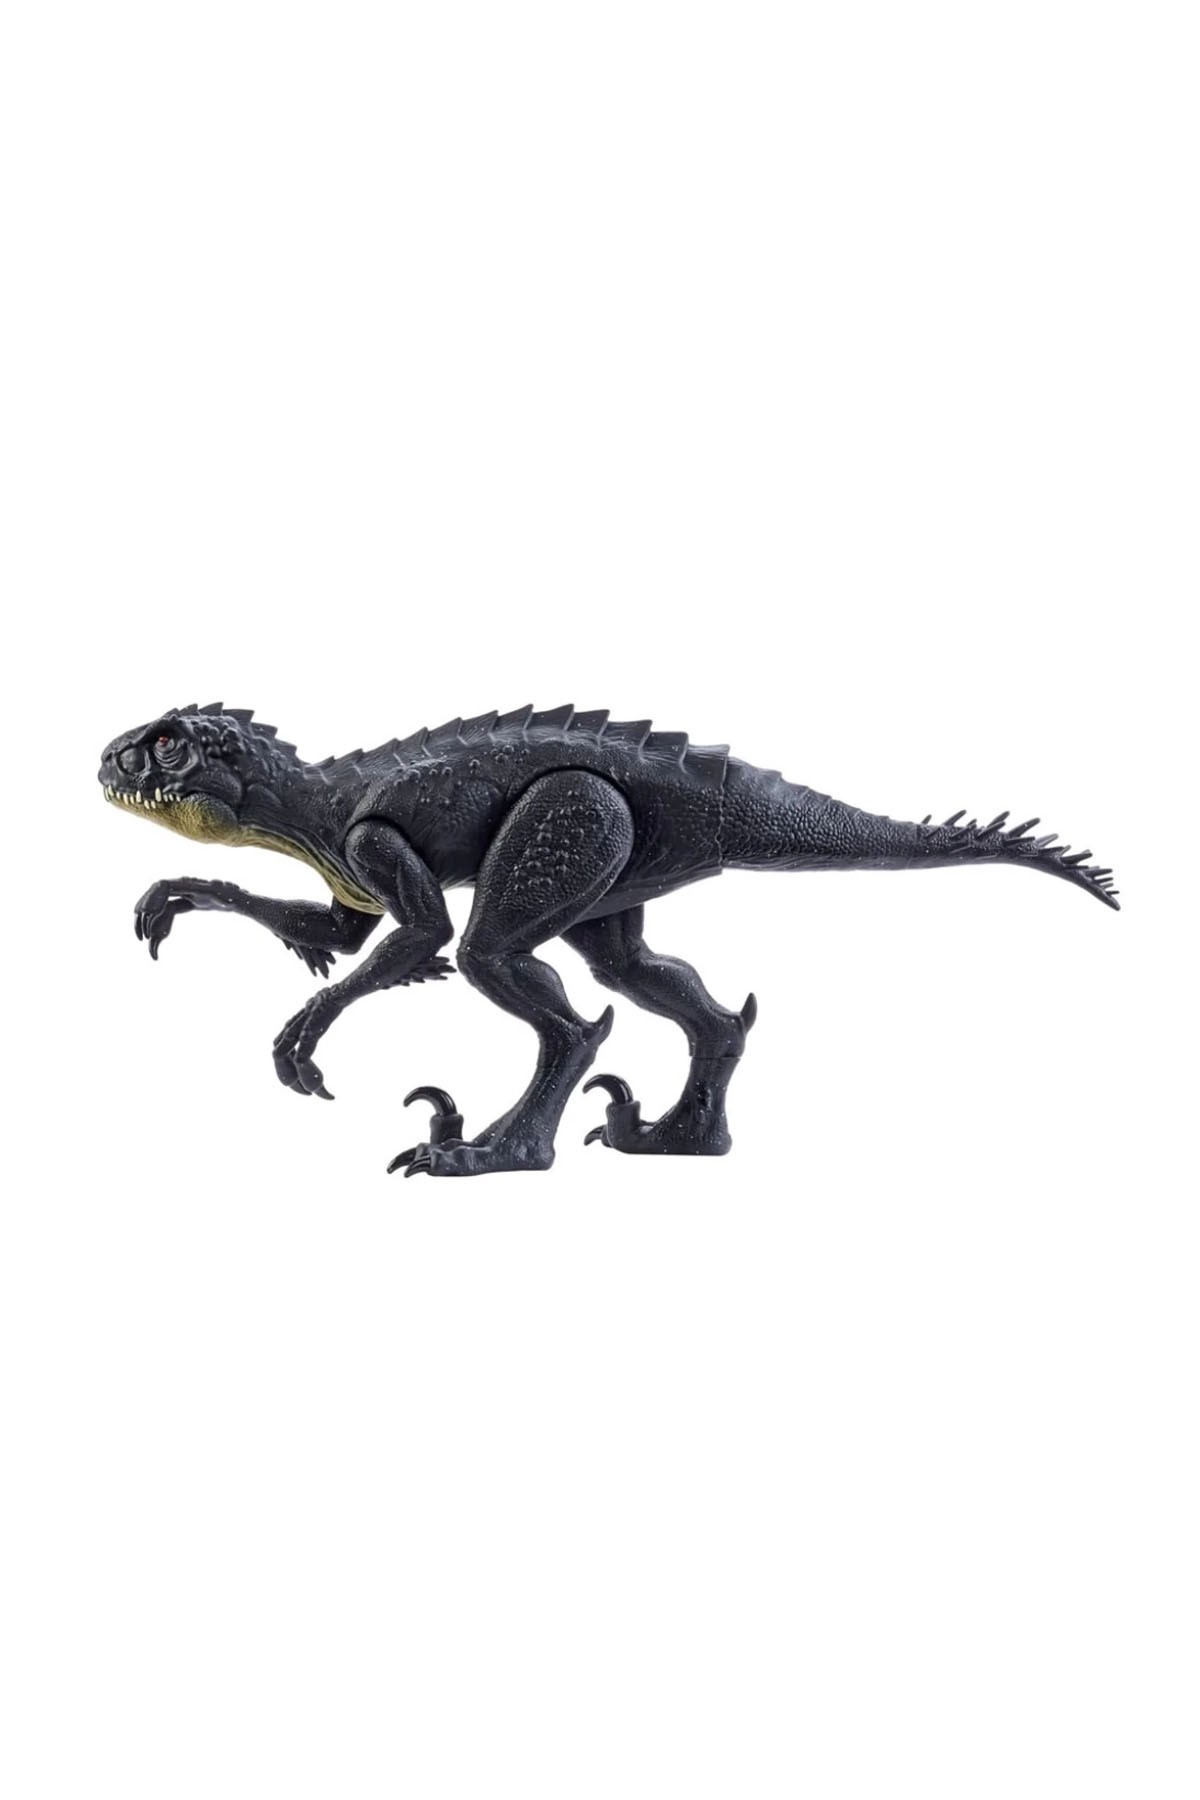 Jurassic World 12 Inç Dinozor Figürleri HMF81